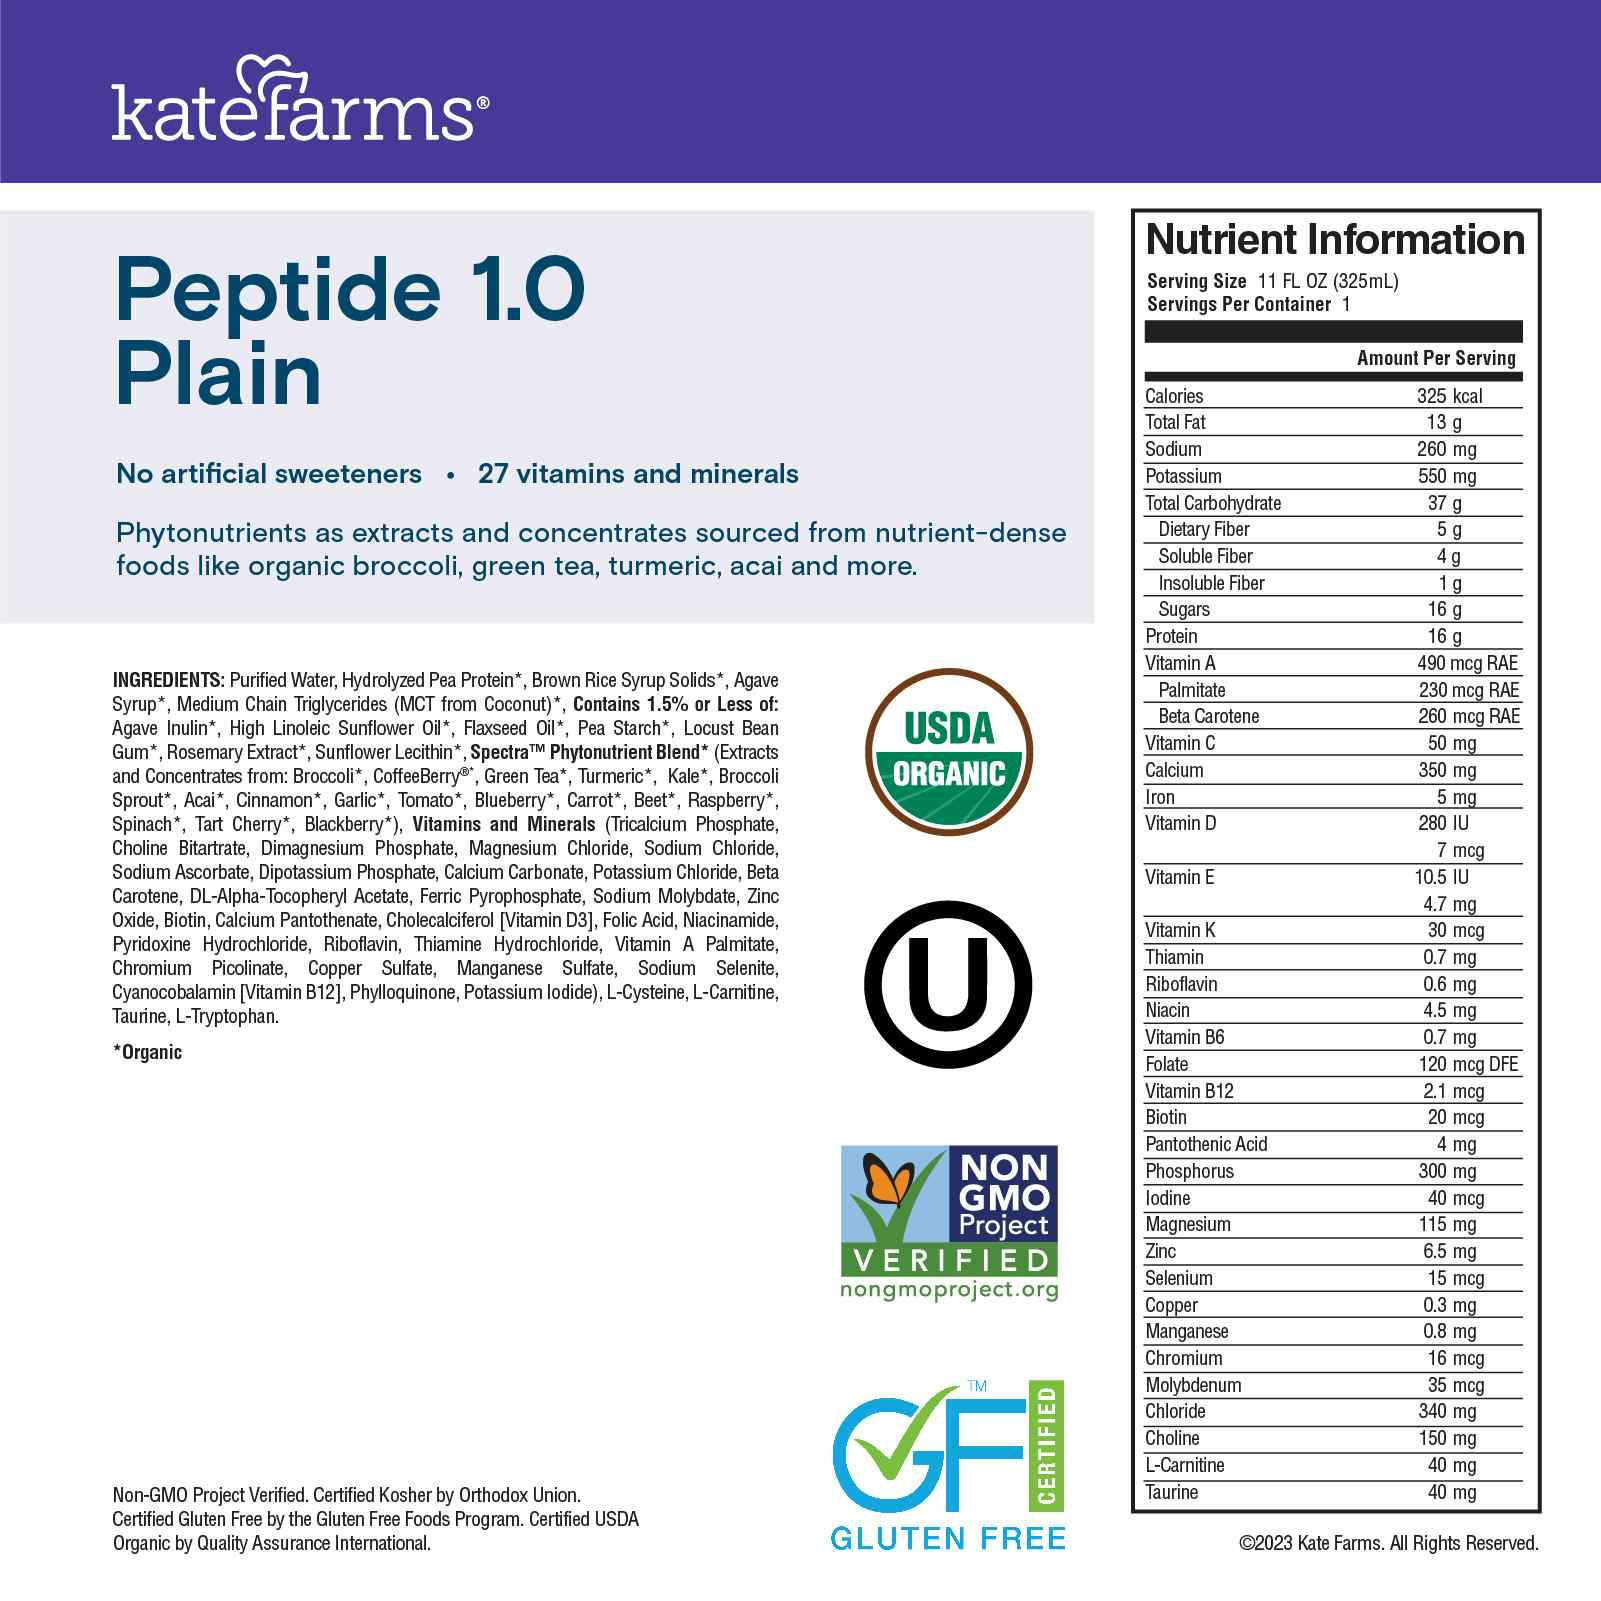 Kate Farms Peptide 1.0 Sole-Source Nutrition, Plain, 11 oz.